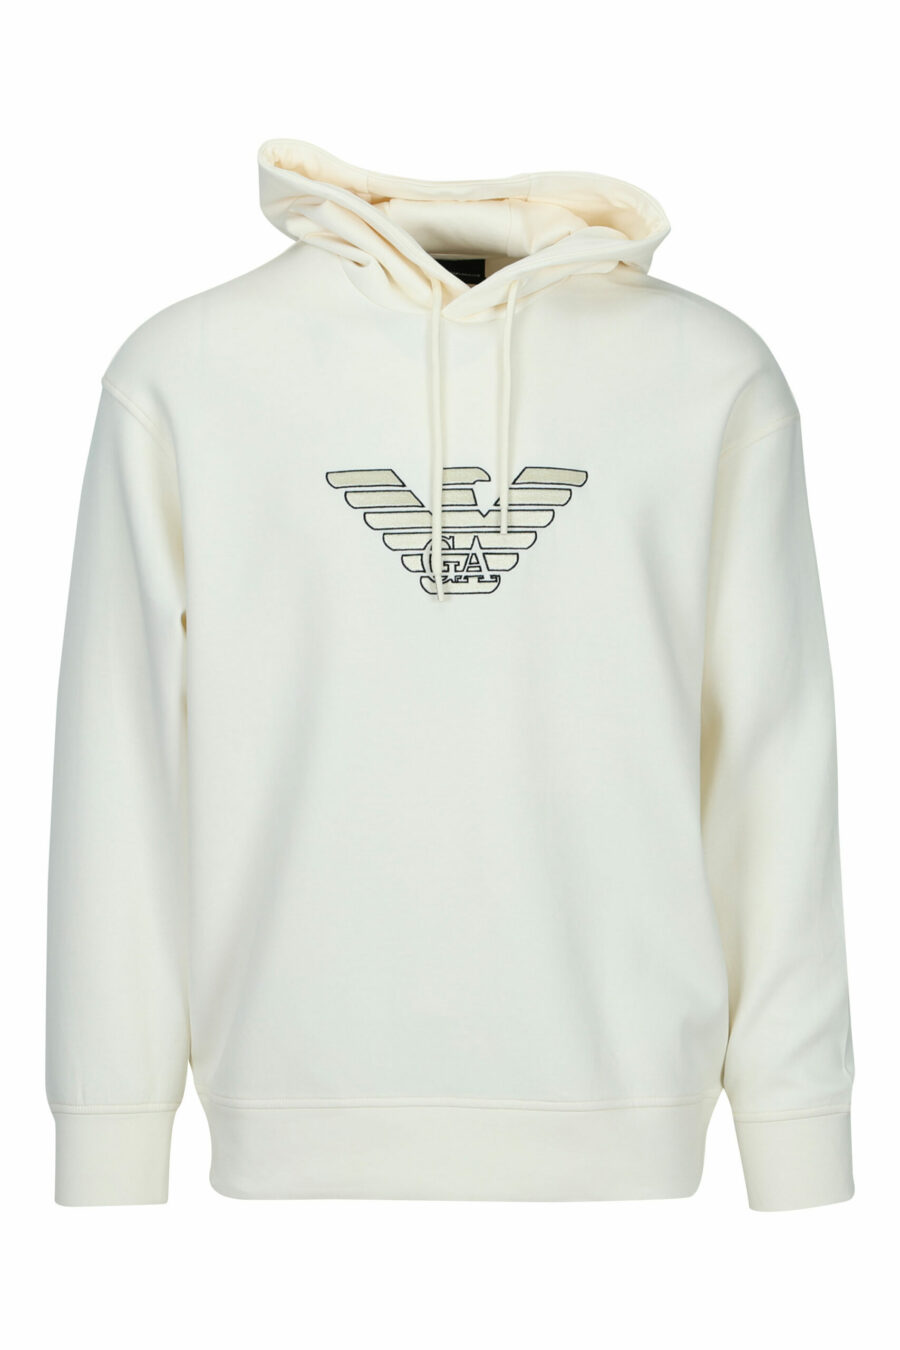 Cream hooded sweatshirt with eagle maxilogue - 8057970989493 scaled